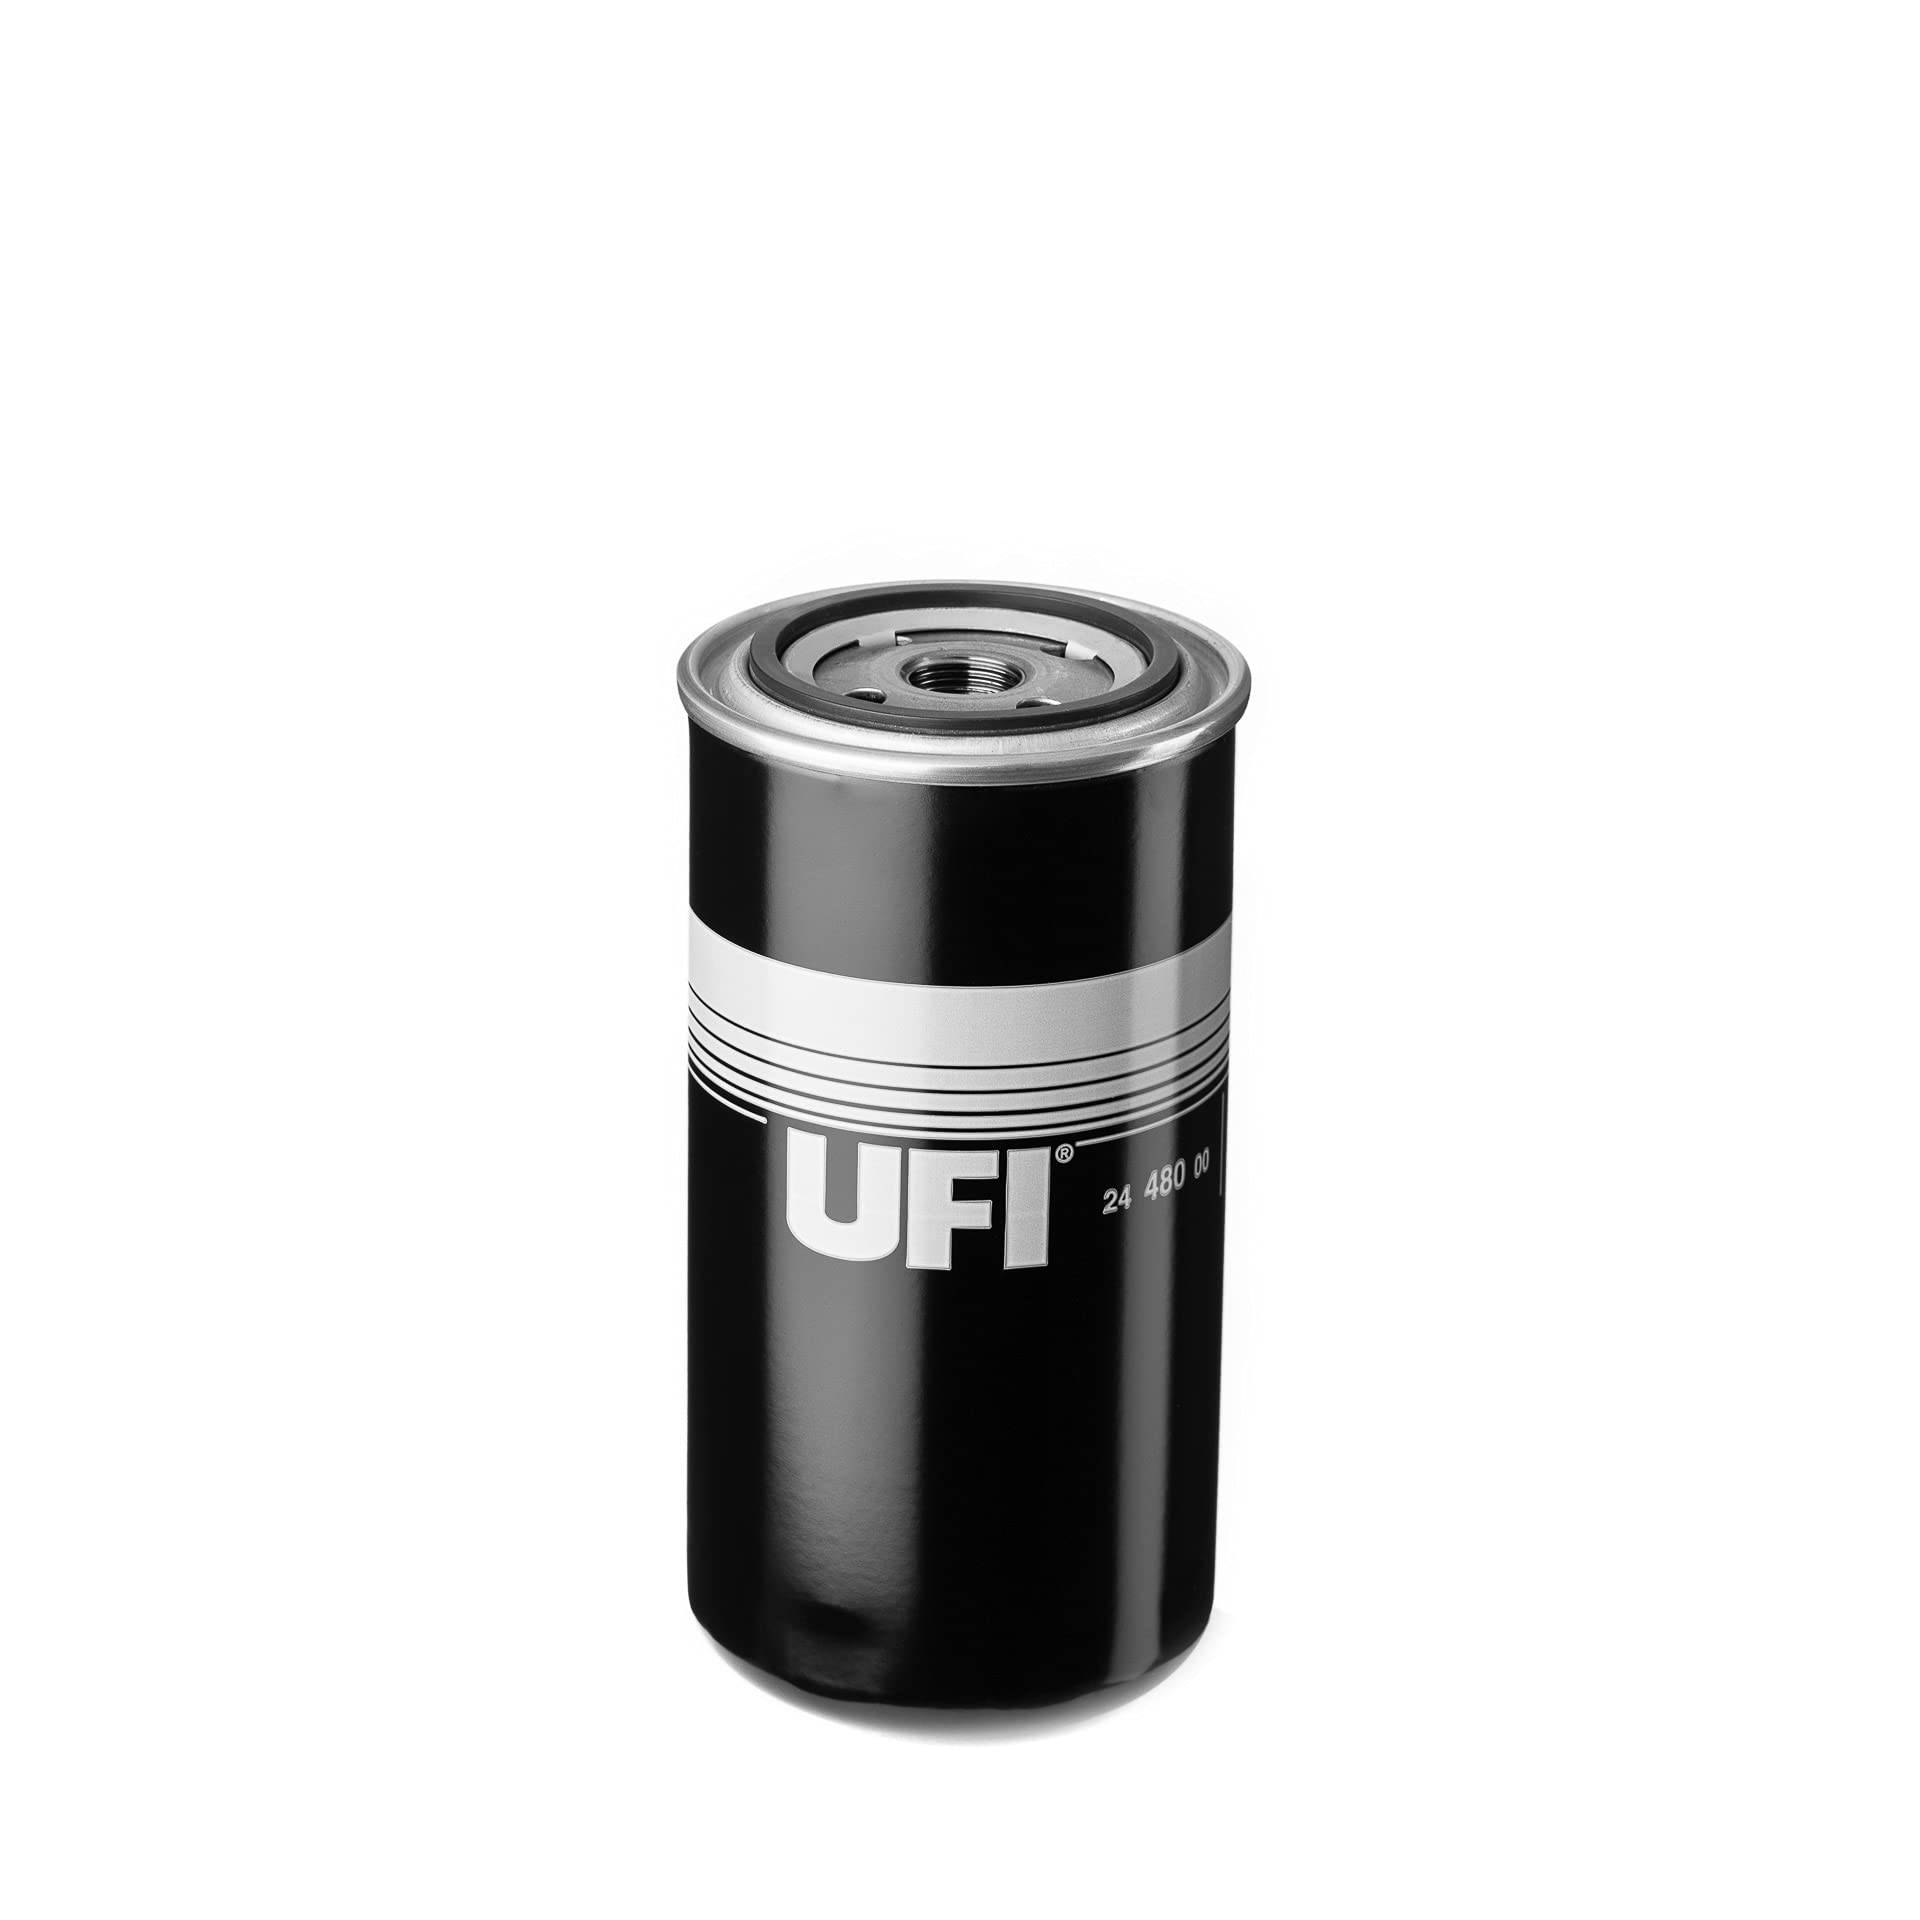 UFI Filters 24.480.00 Kraftstofffilter von UFI